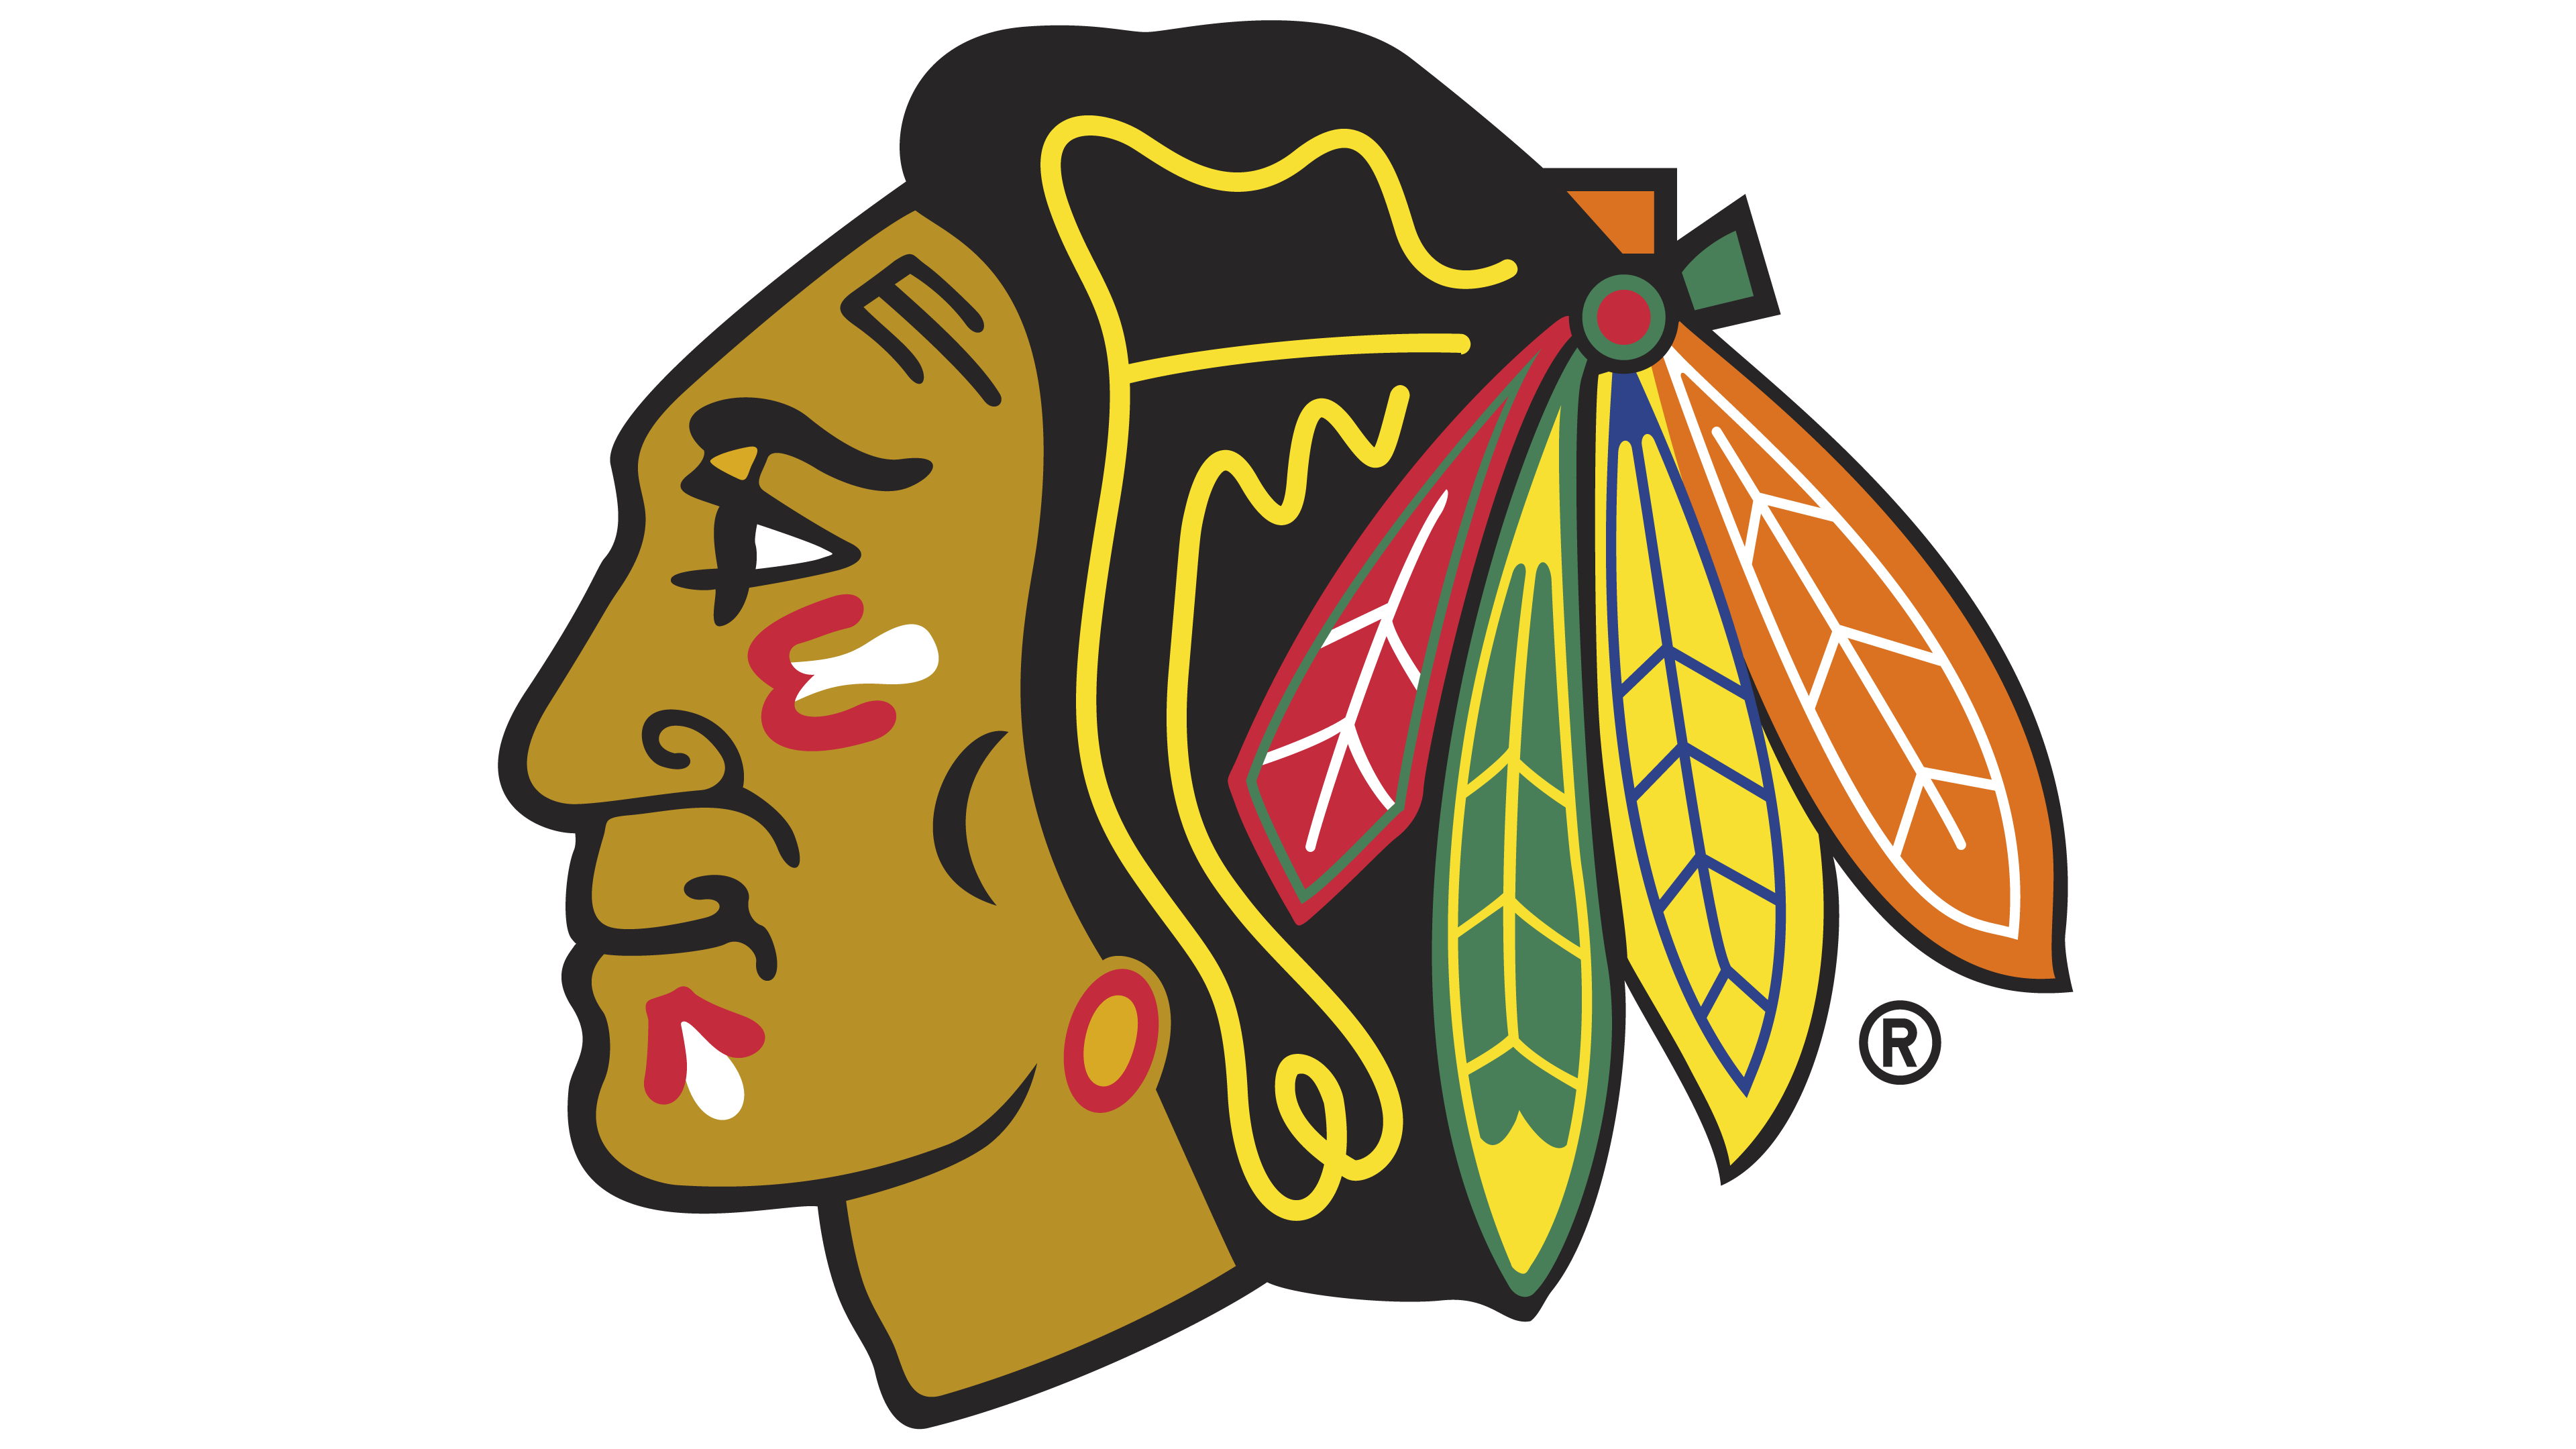 Chicago Hawks Logo - Chicago Blackhawks logo - Interesting History Team Name and emblem